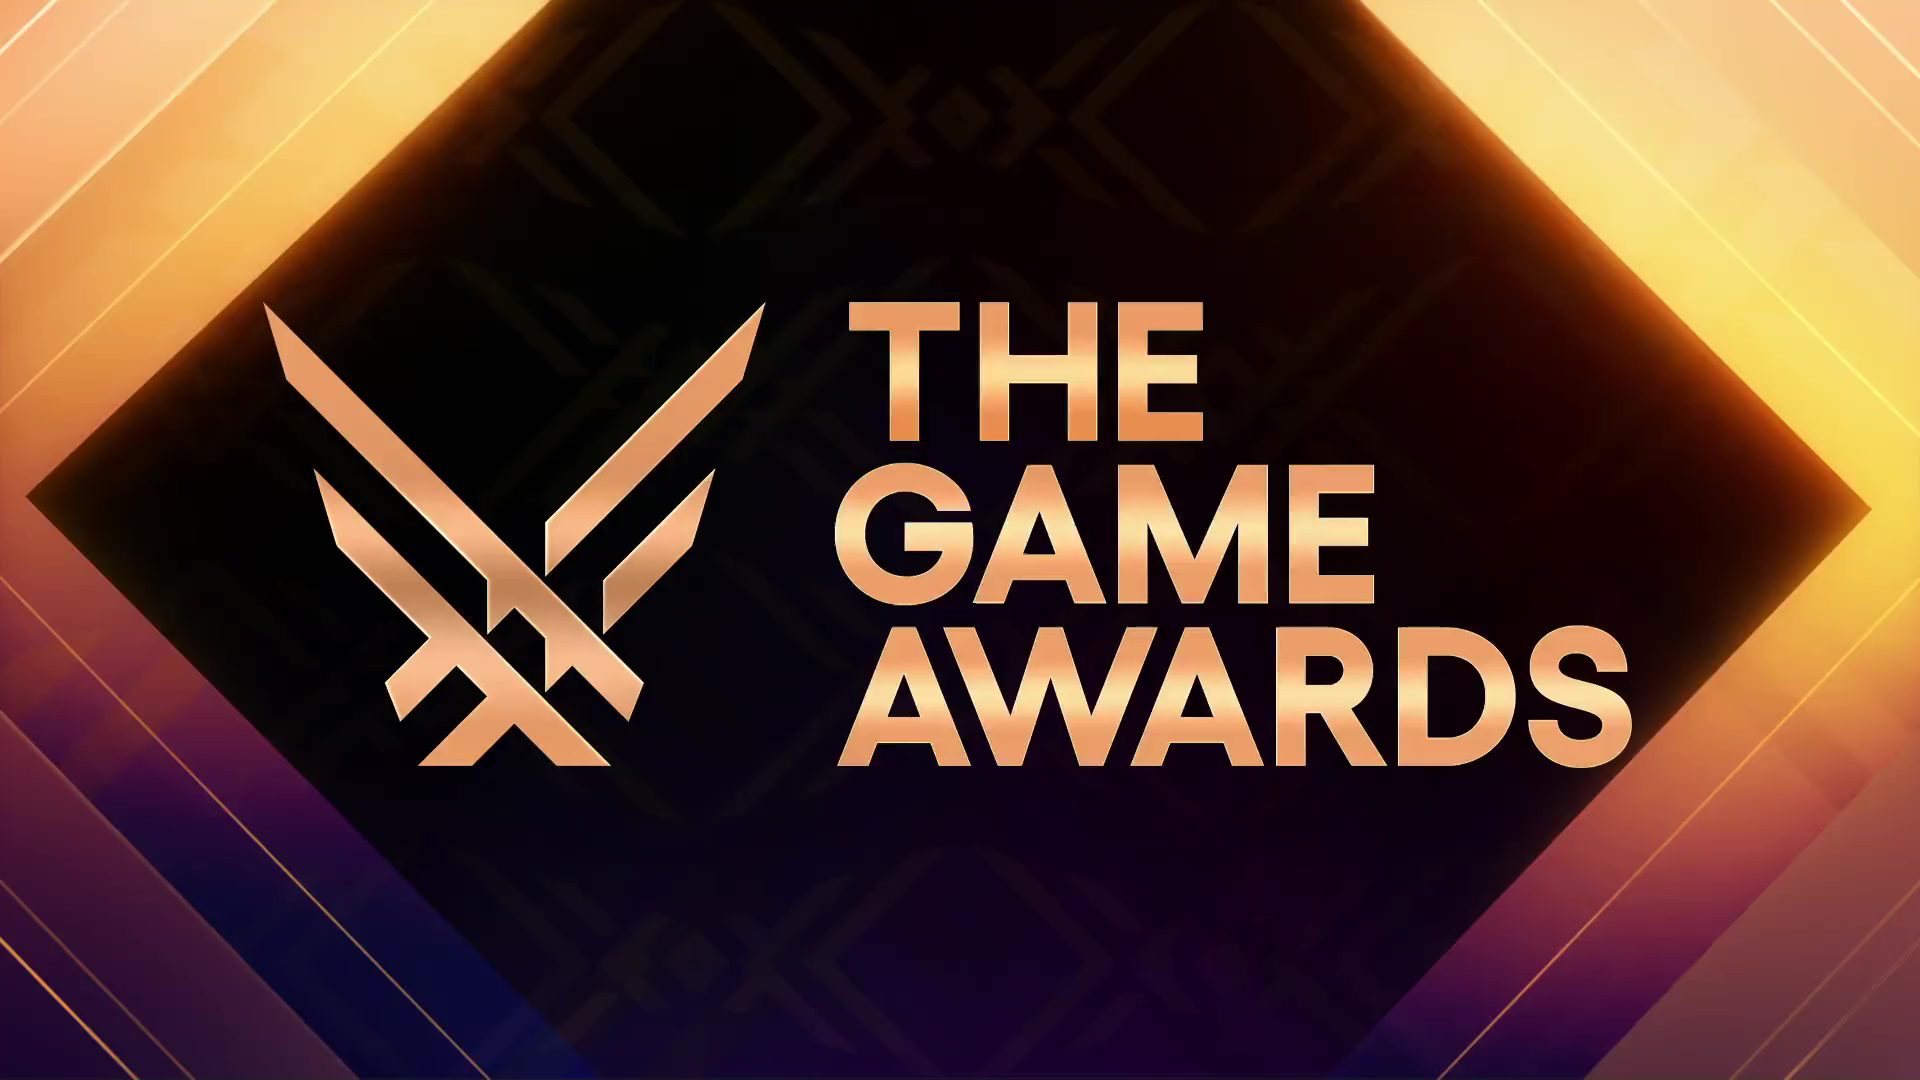 Os INDICADOS ao JOGO do ANO - The Game Awards 2020 